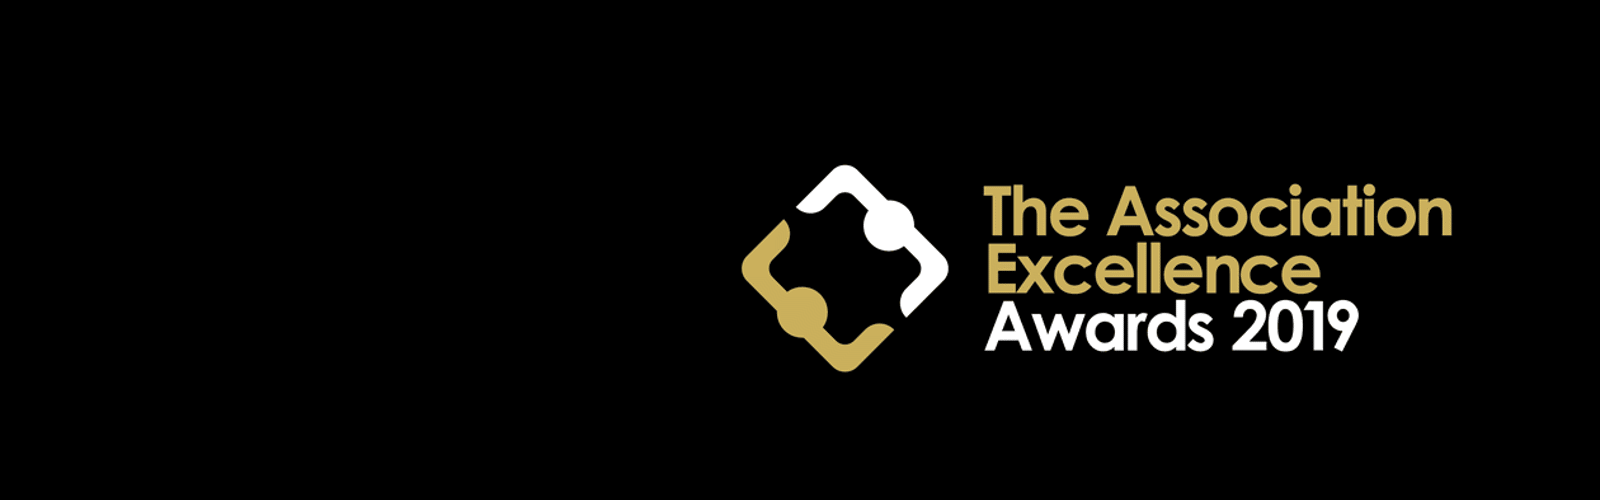 The Association Excellence Awards 2019 logo